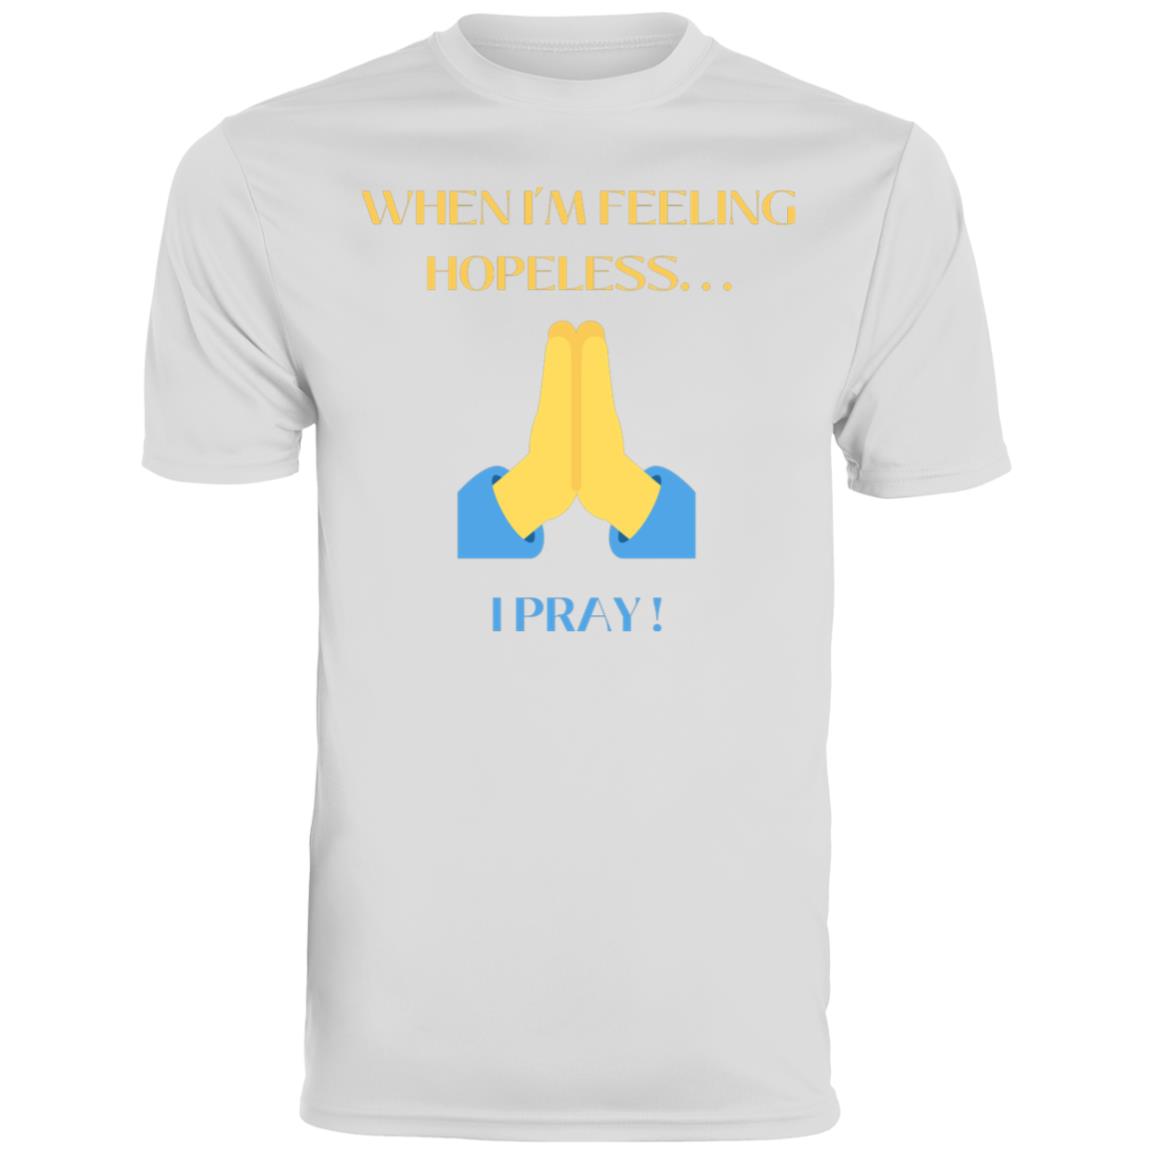 When I'm Feeling Hopeless. . . I Pray! Active wear T-Shirt